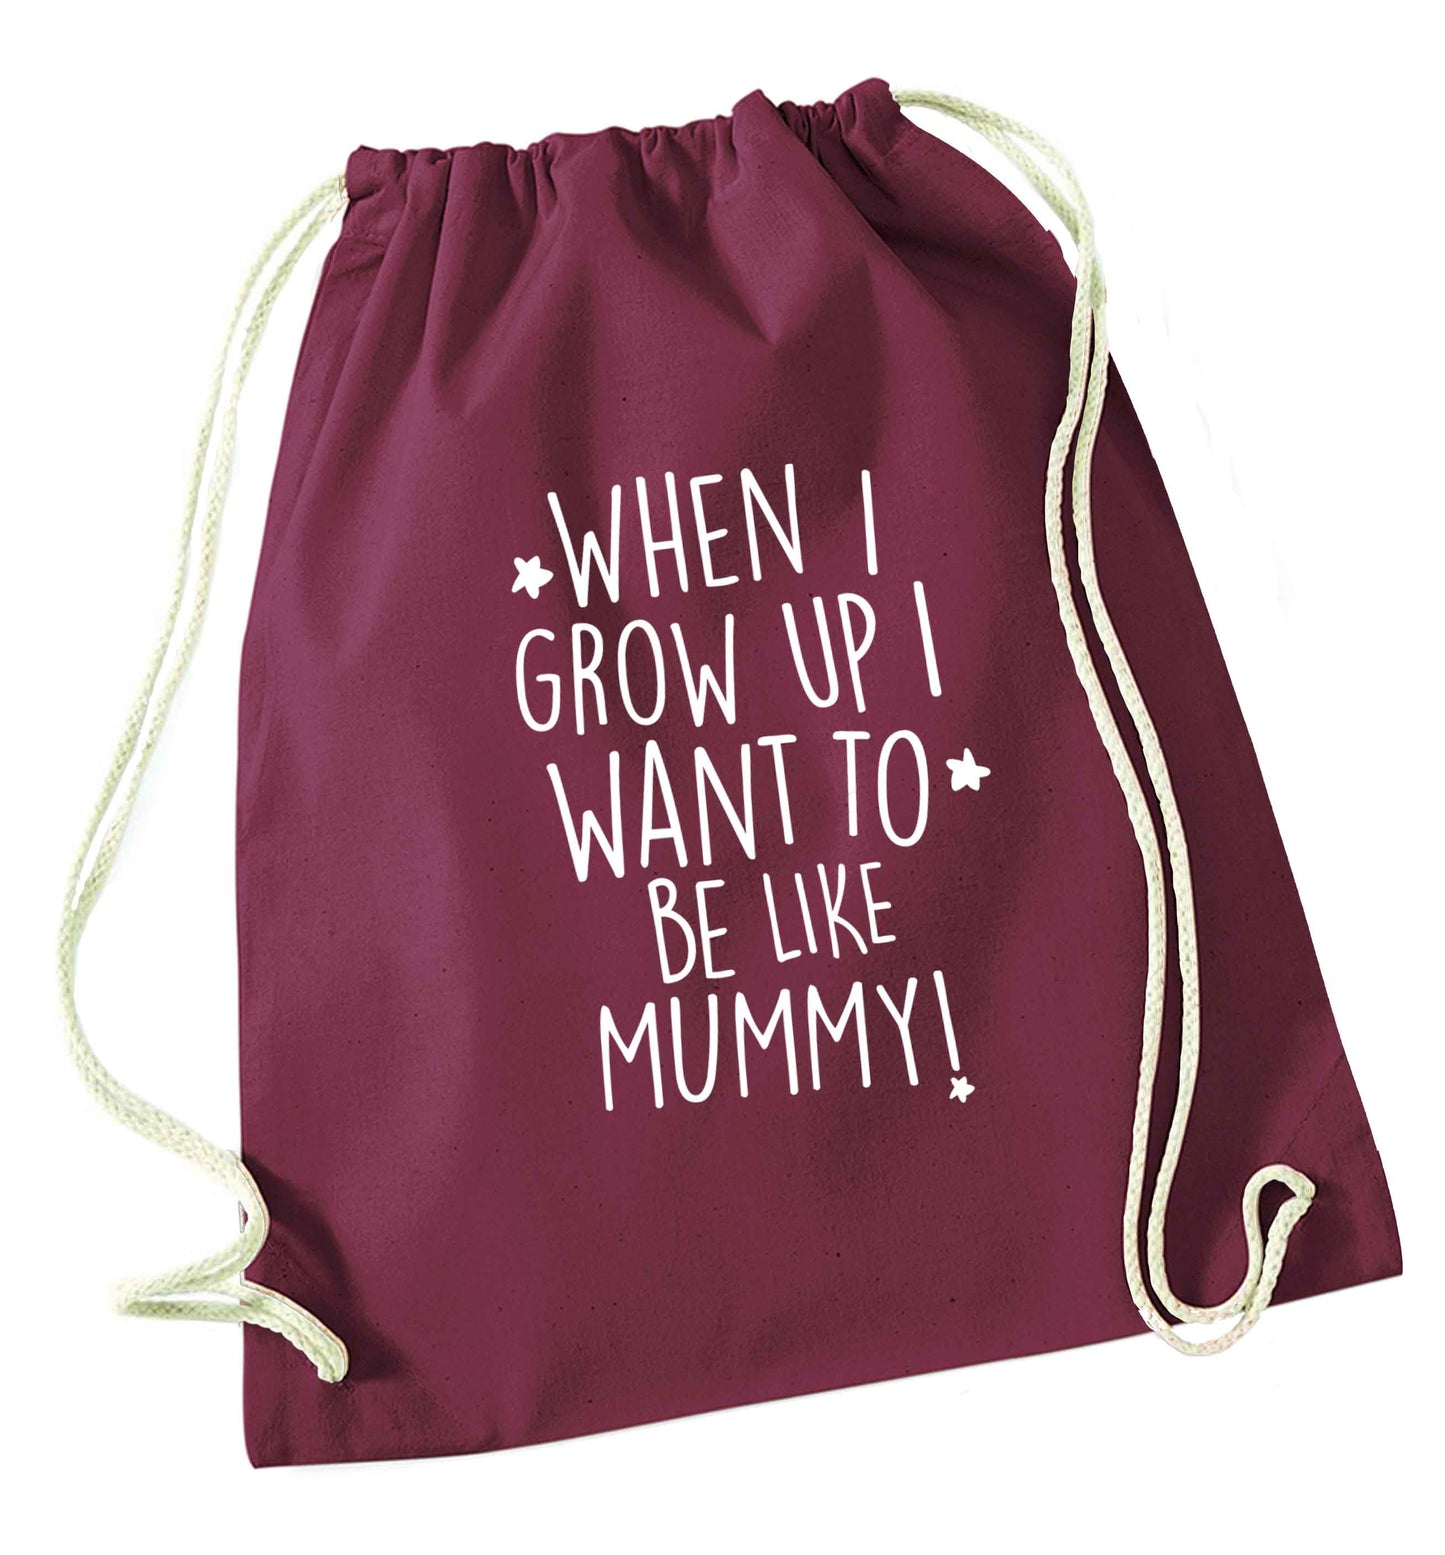 When I grow up I want to be like my mummy maroon drawstring bag